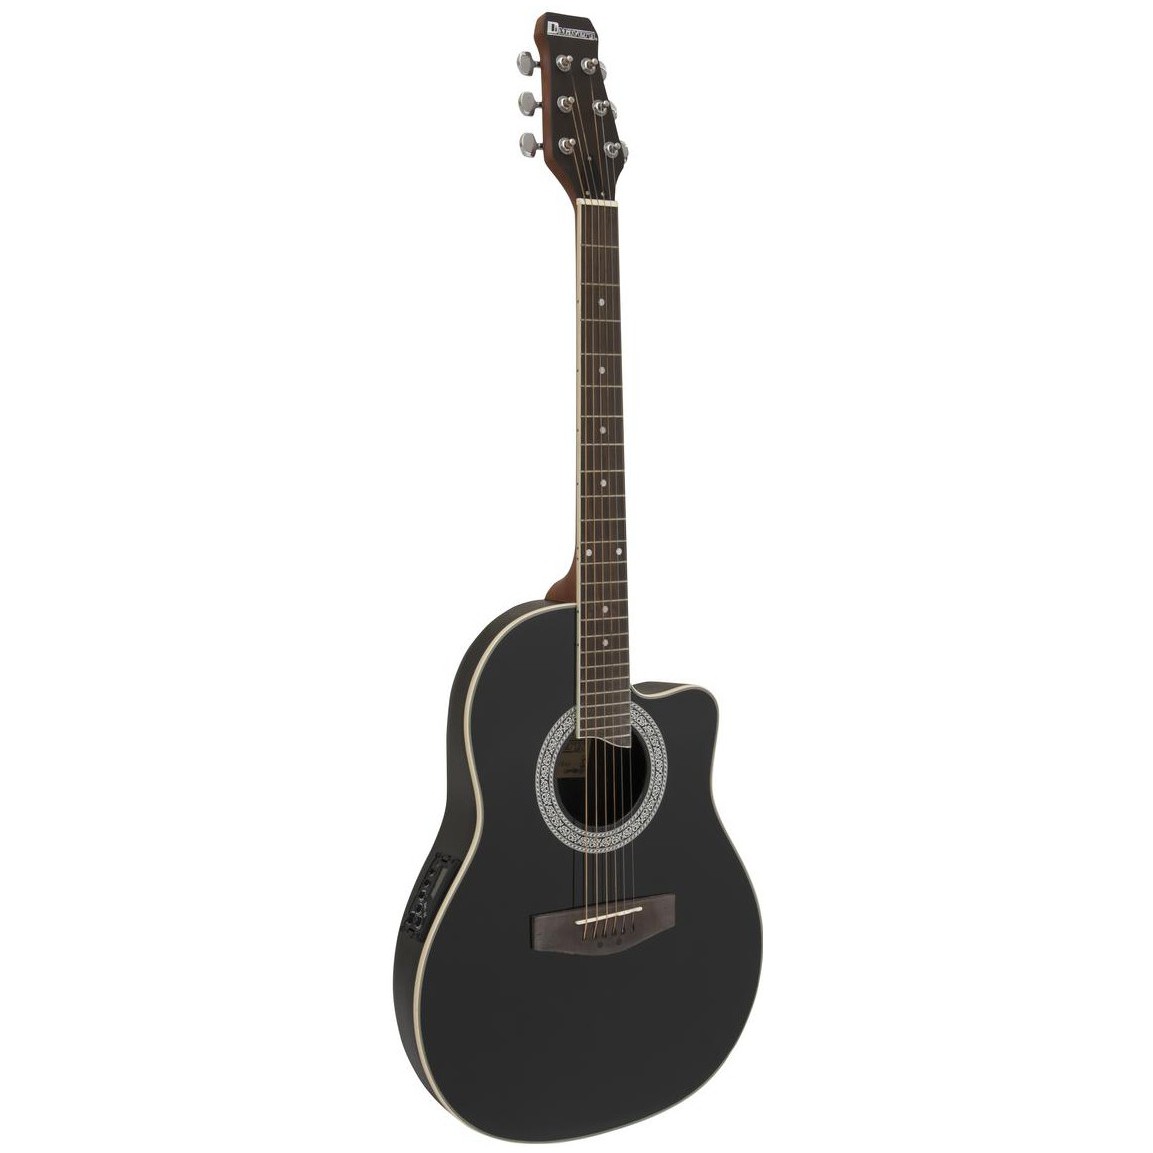 Dimavery RB-300, elektroakustická kytara typu Ovation, černá žíhaná